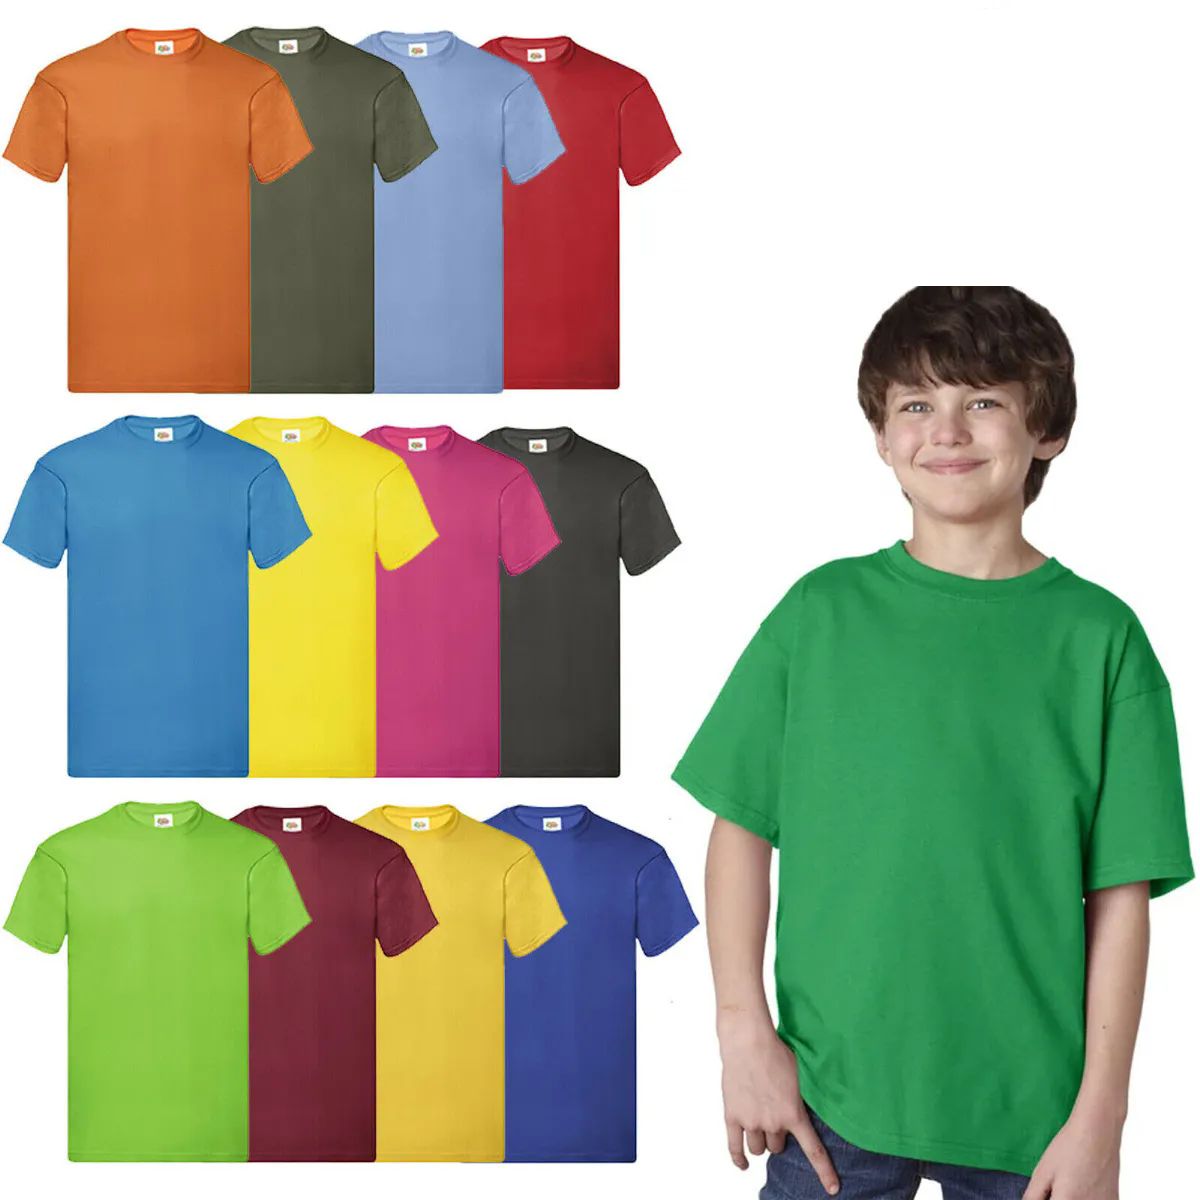 432 Wholesale Billion Hats Kids Youth Cotton Assorted Colors T Shirts Size S